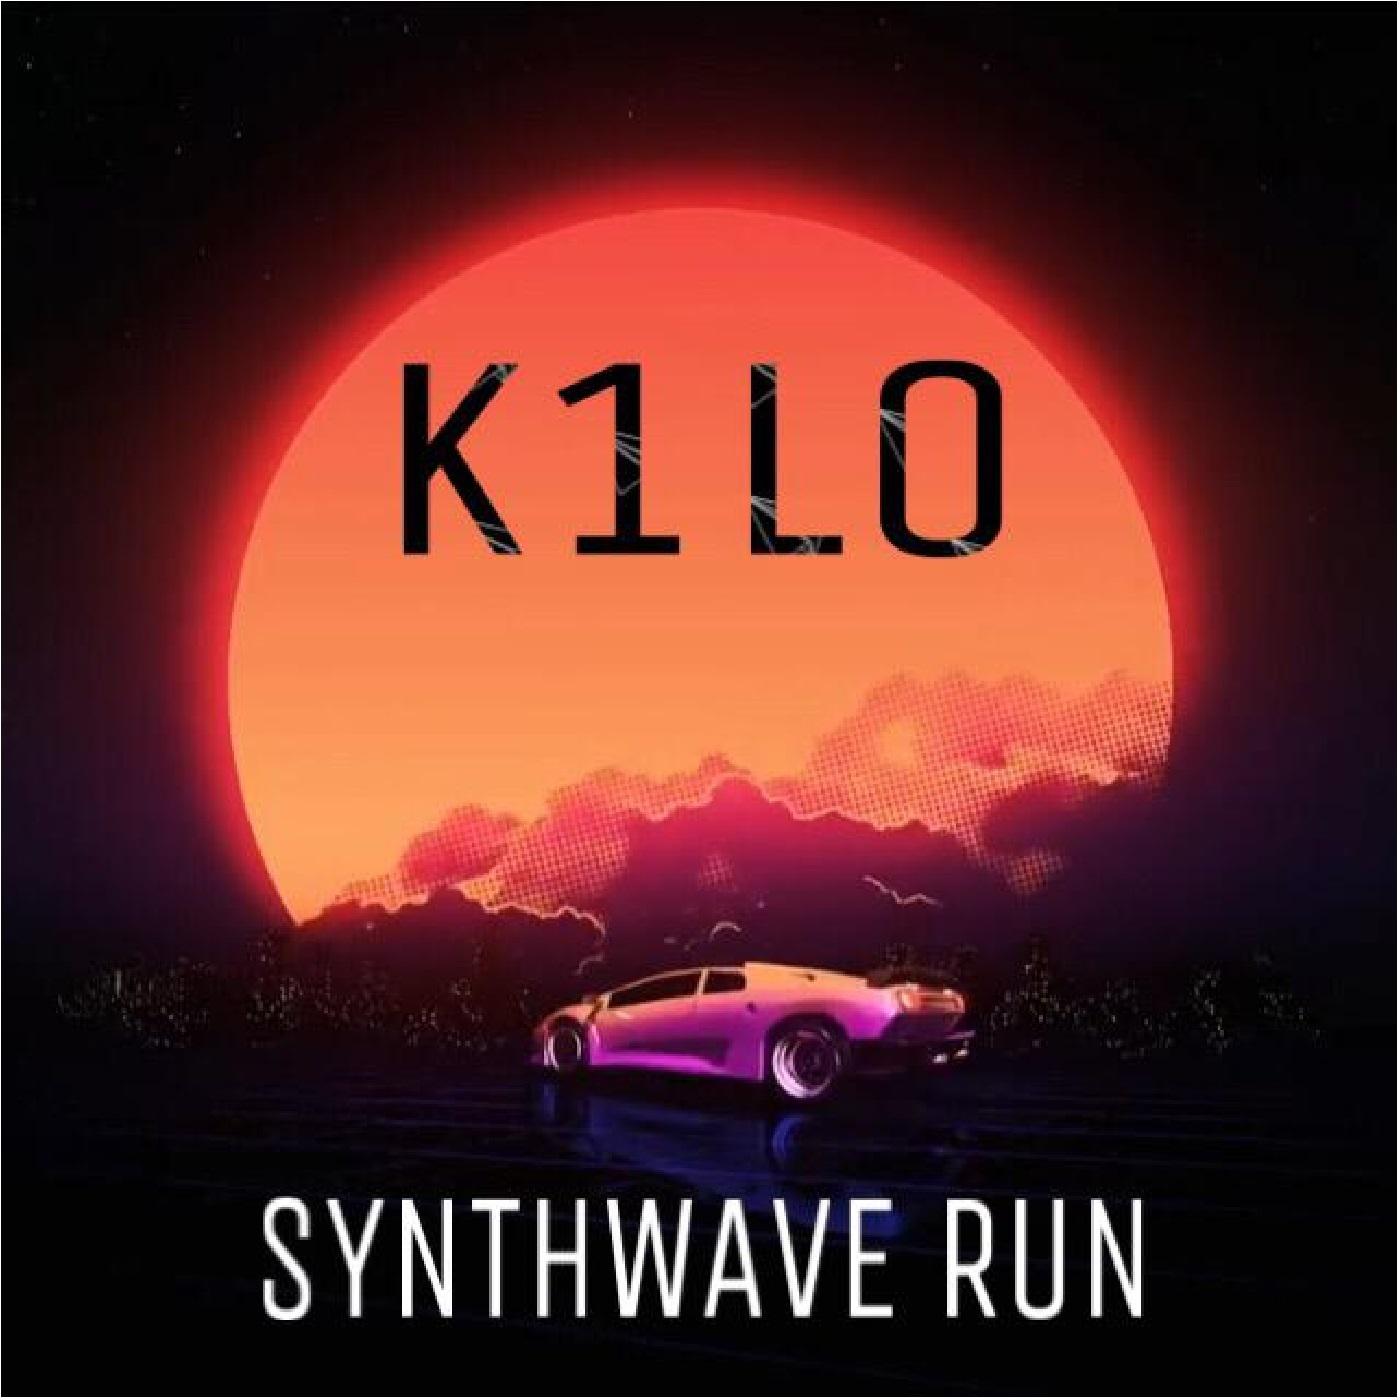 K1LO - Synthwave Run